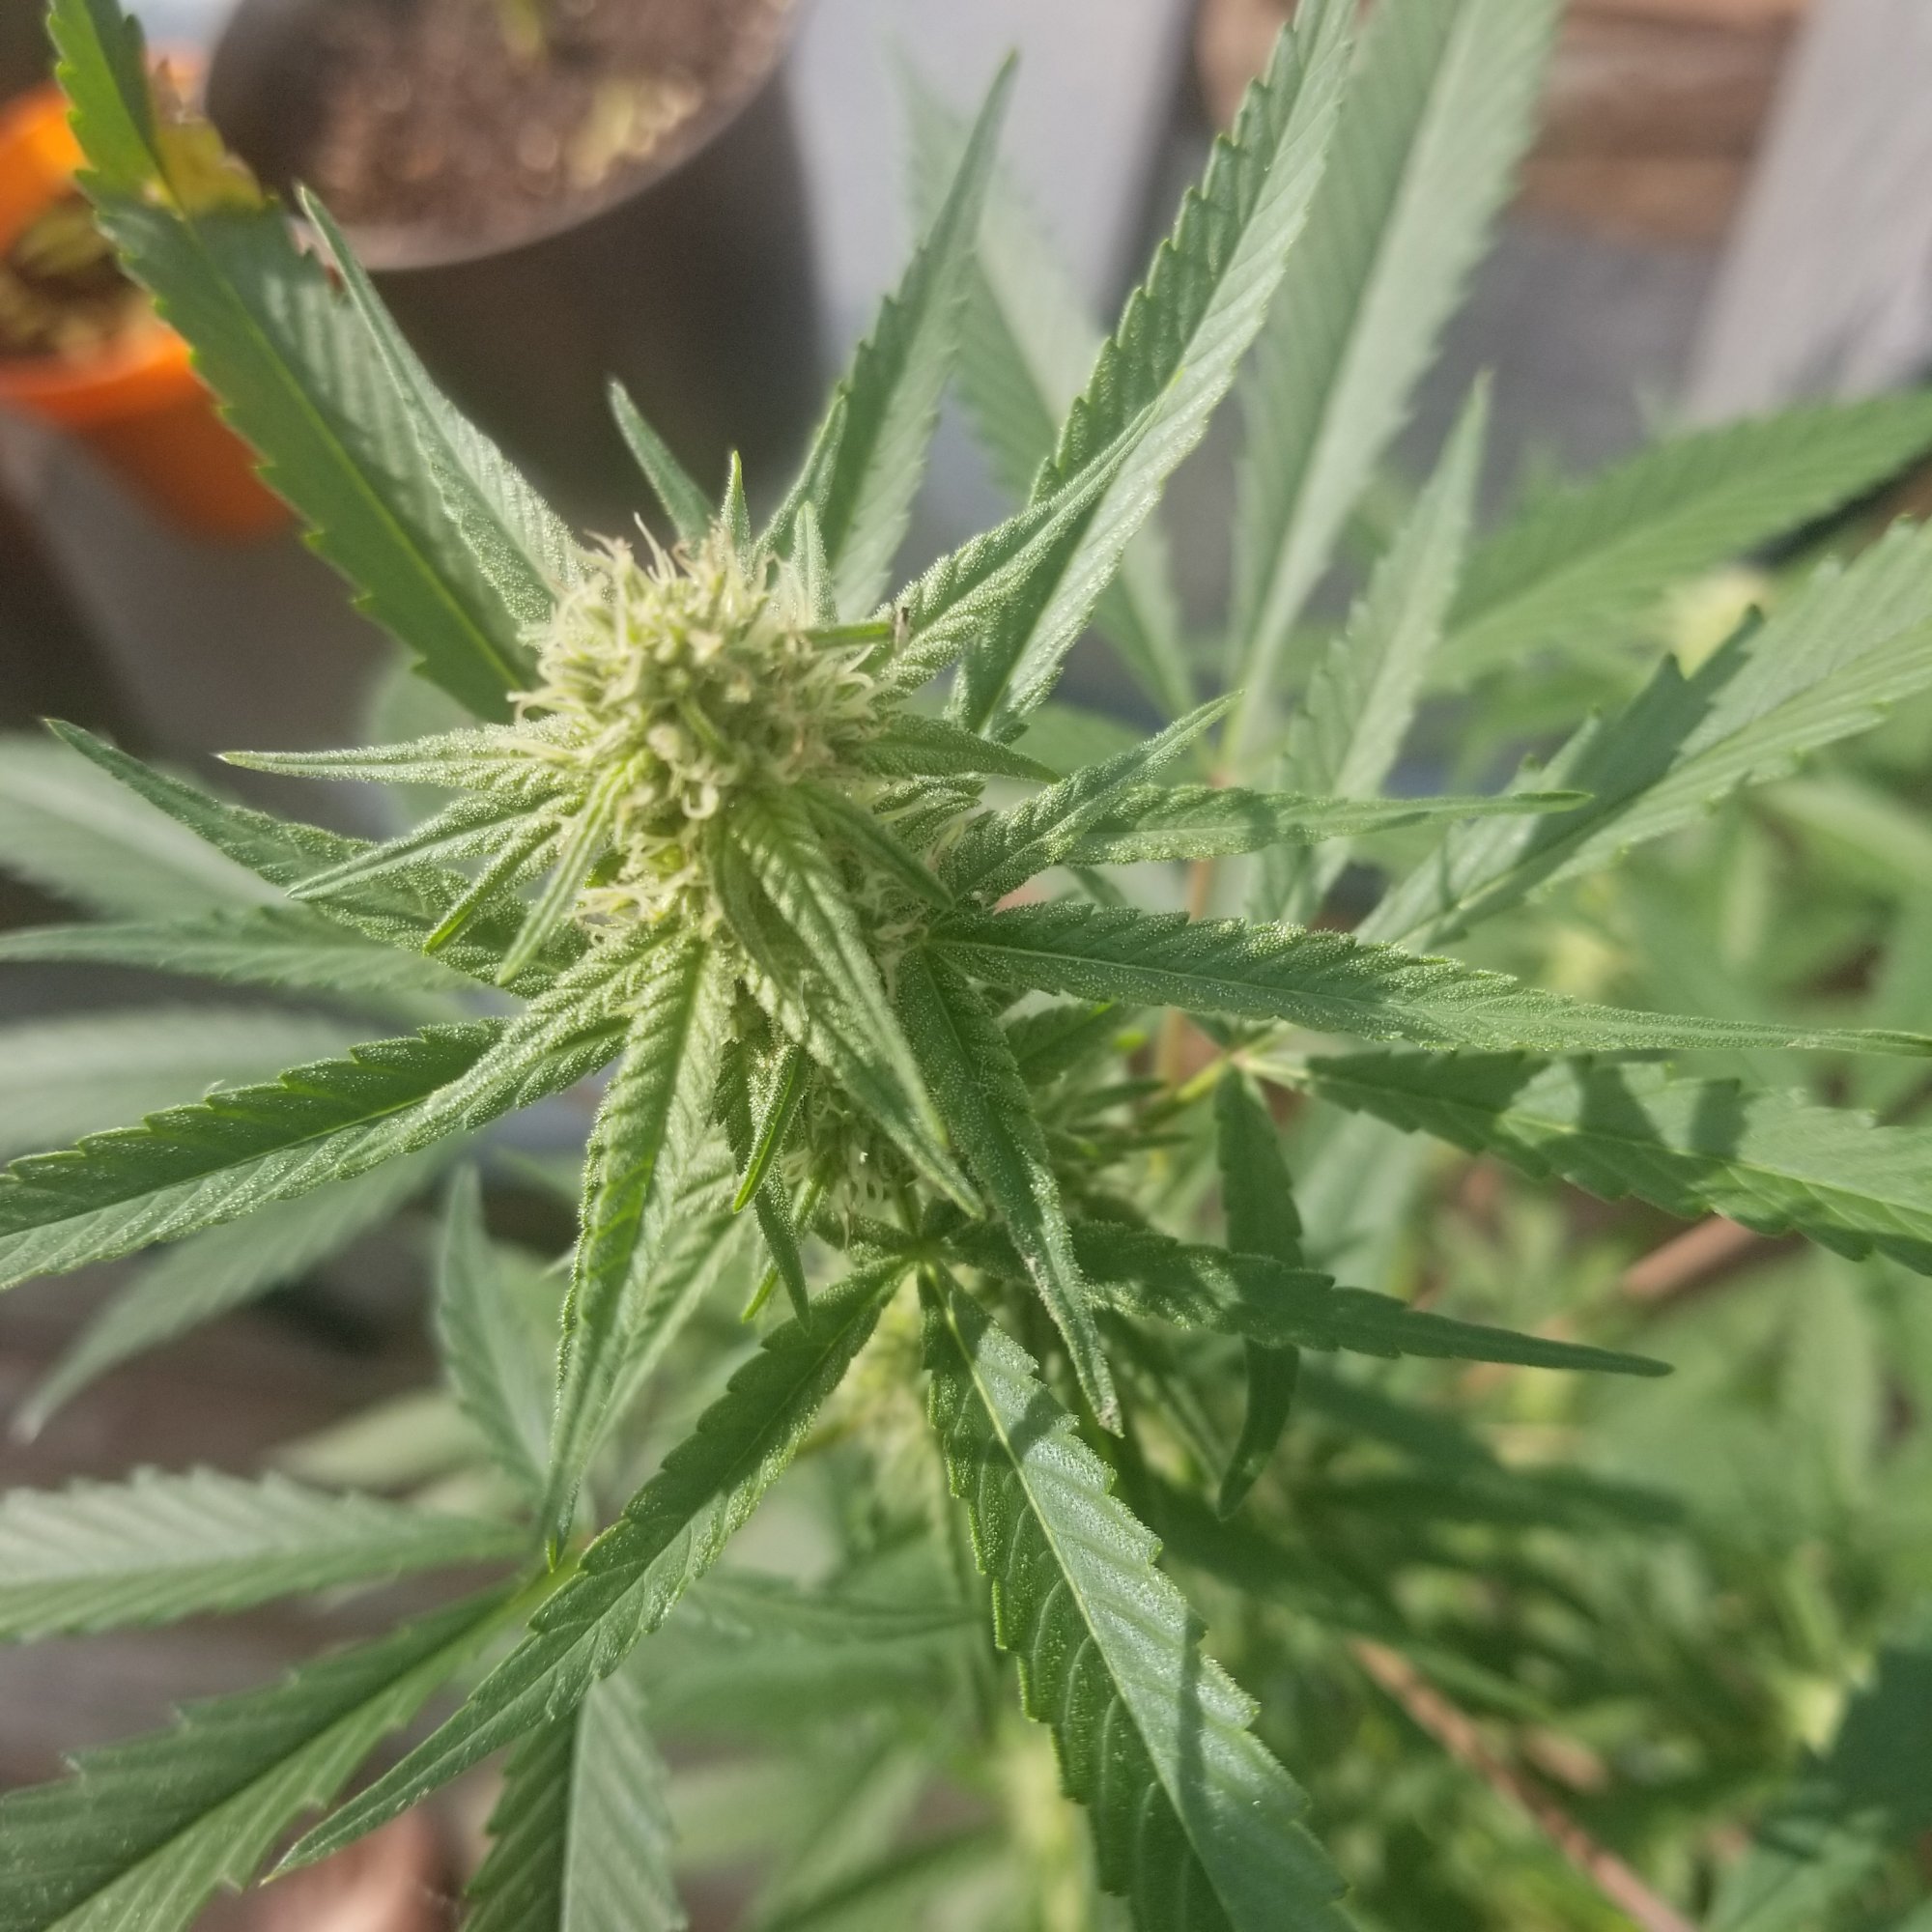 Doea anyone recognize this strain 3